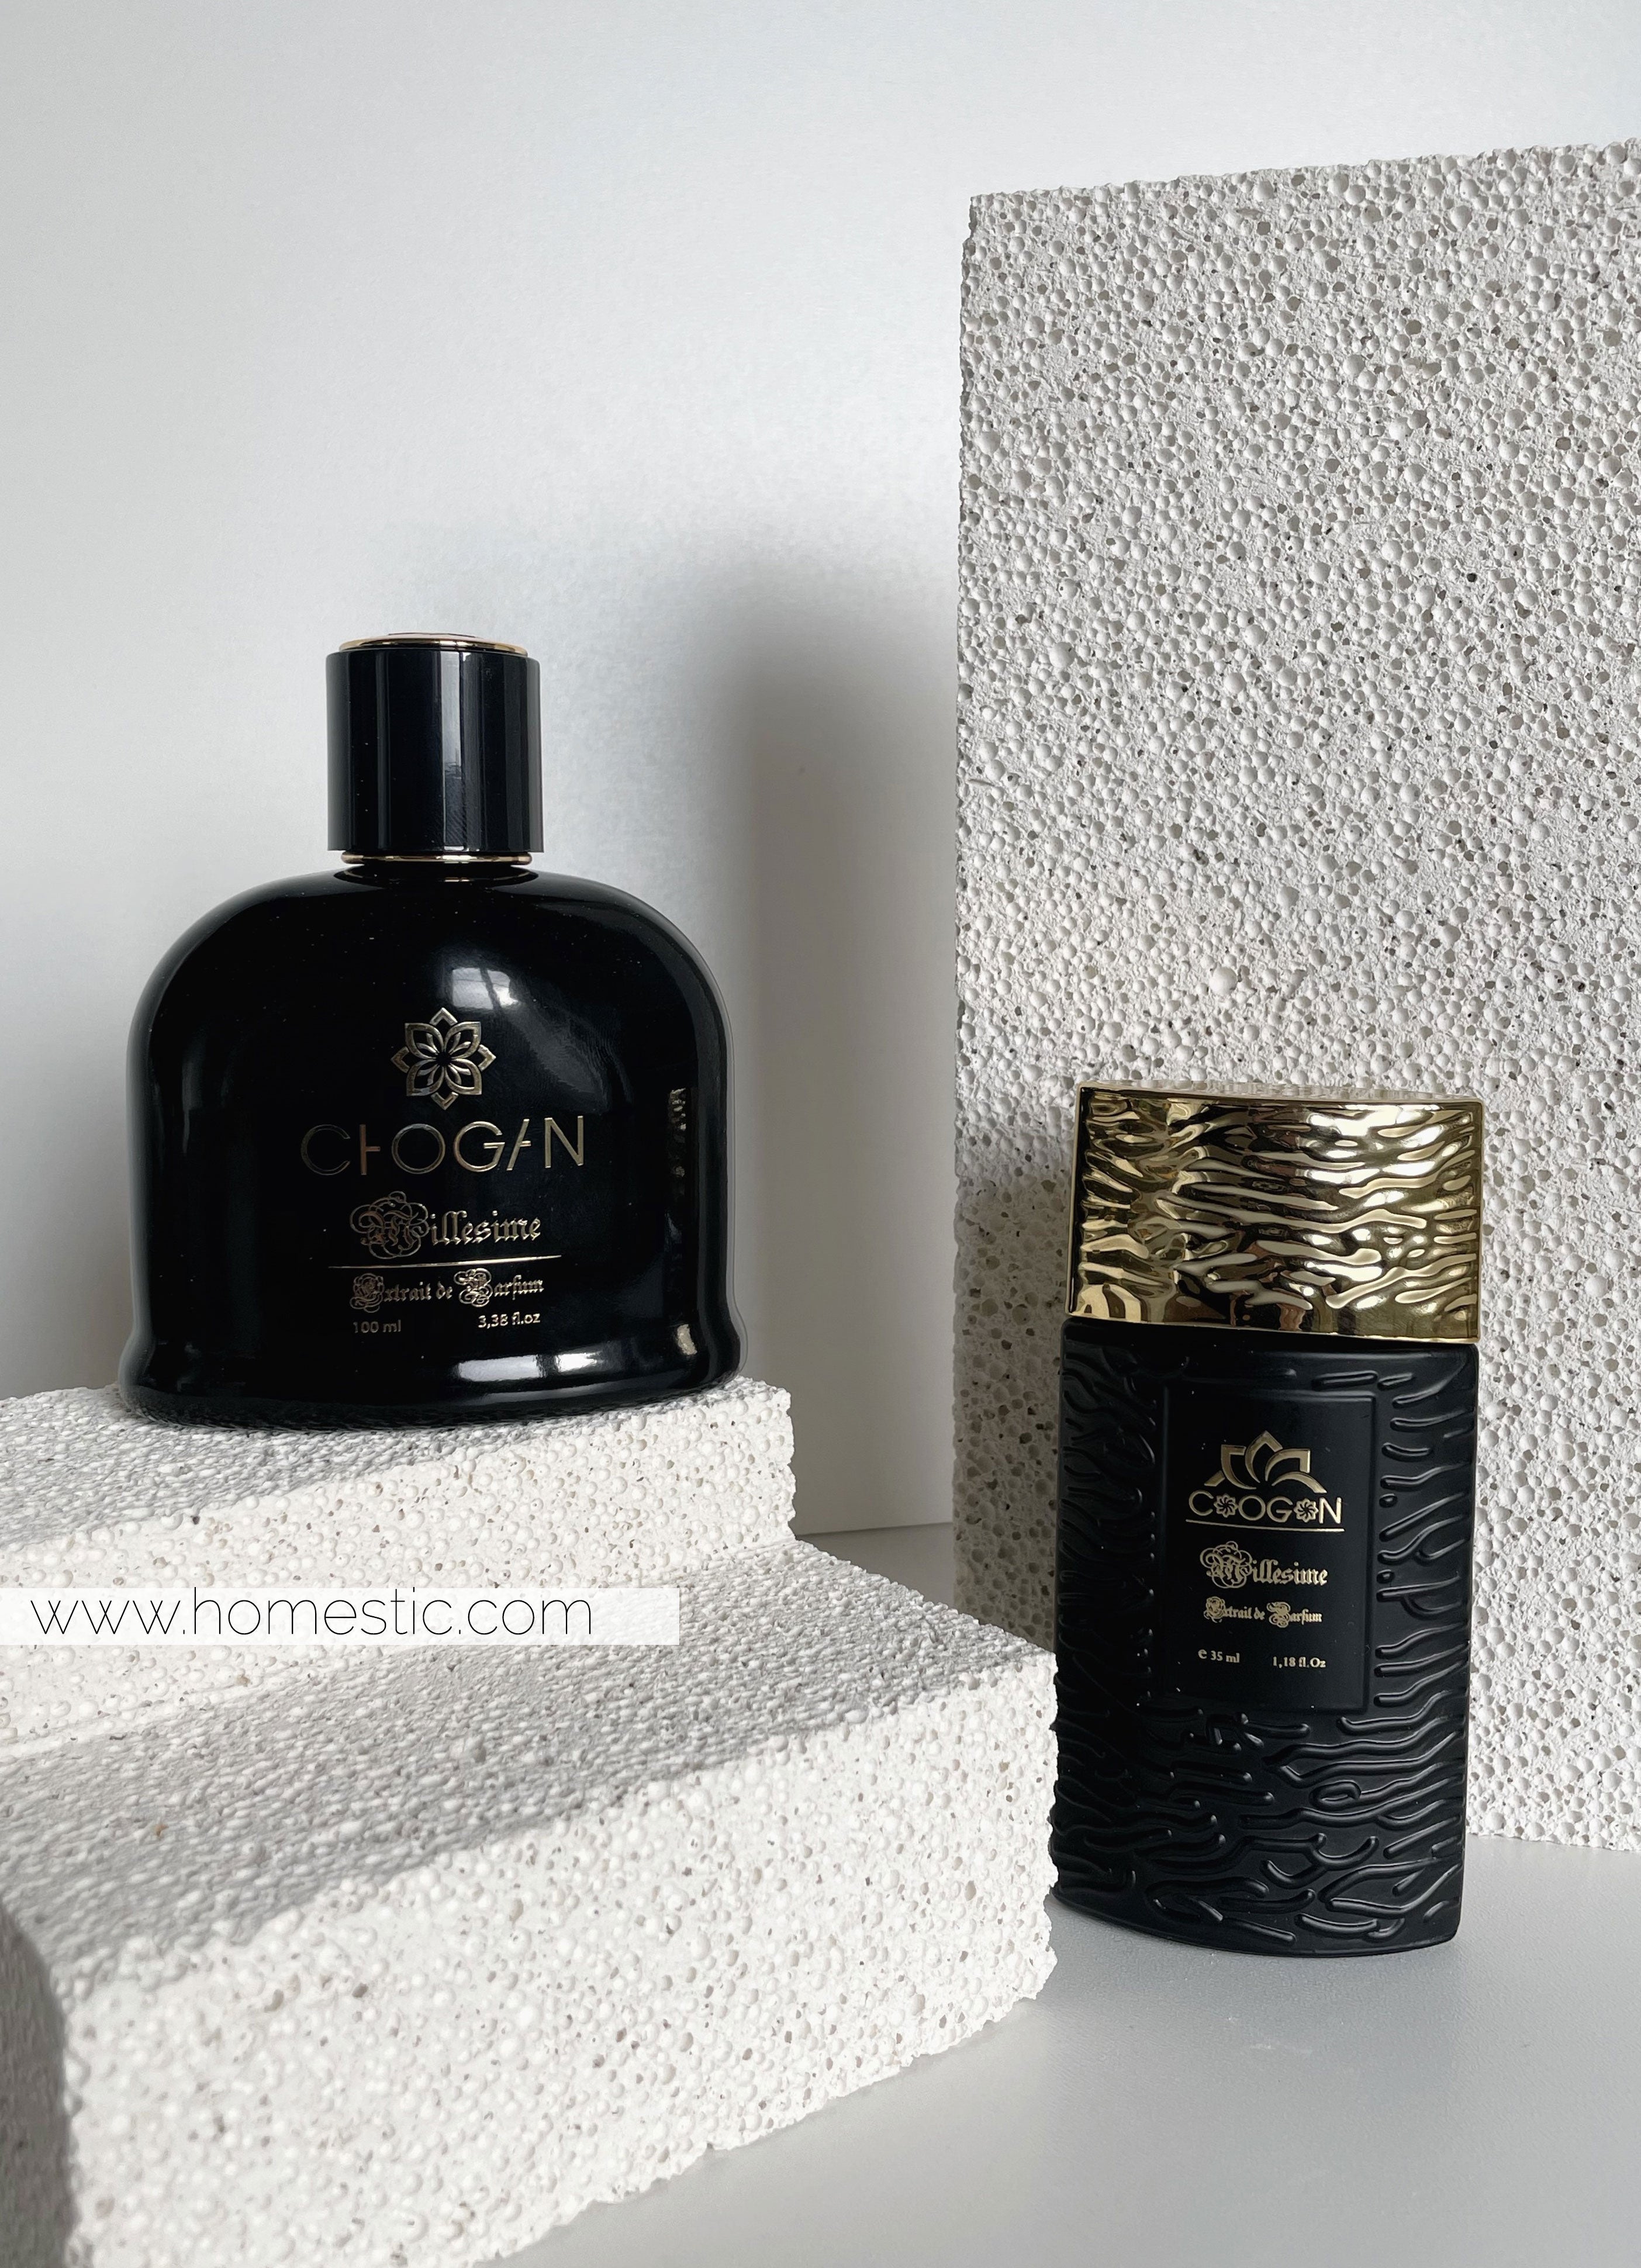 Chogan parfem br. 114 (inspiriran notama Louis Vuitton - Ombre